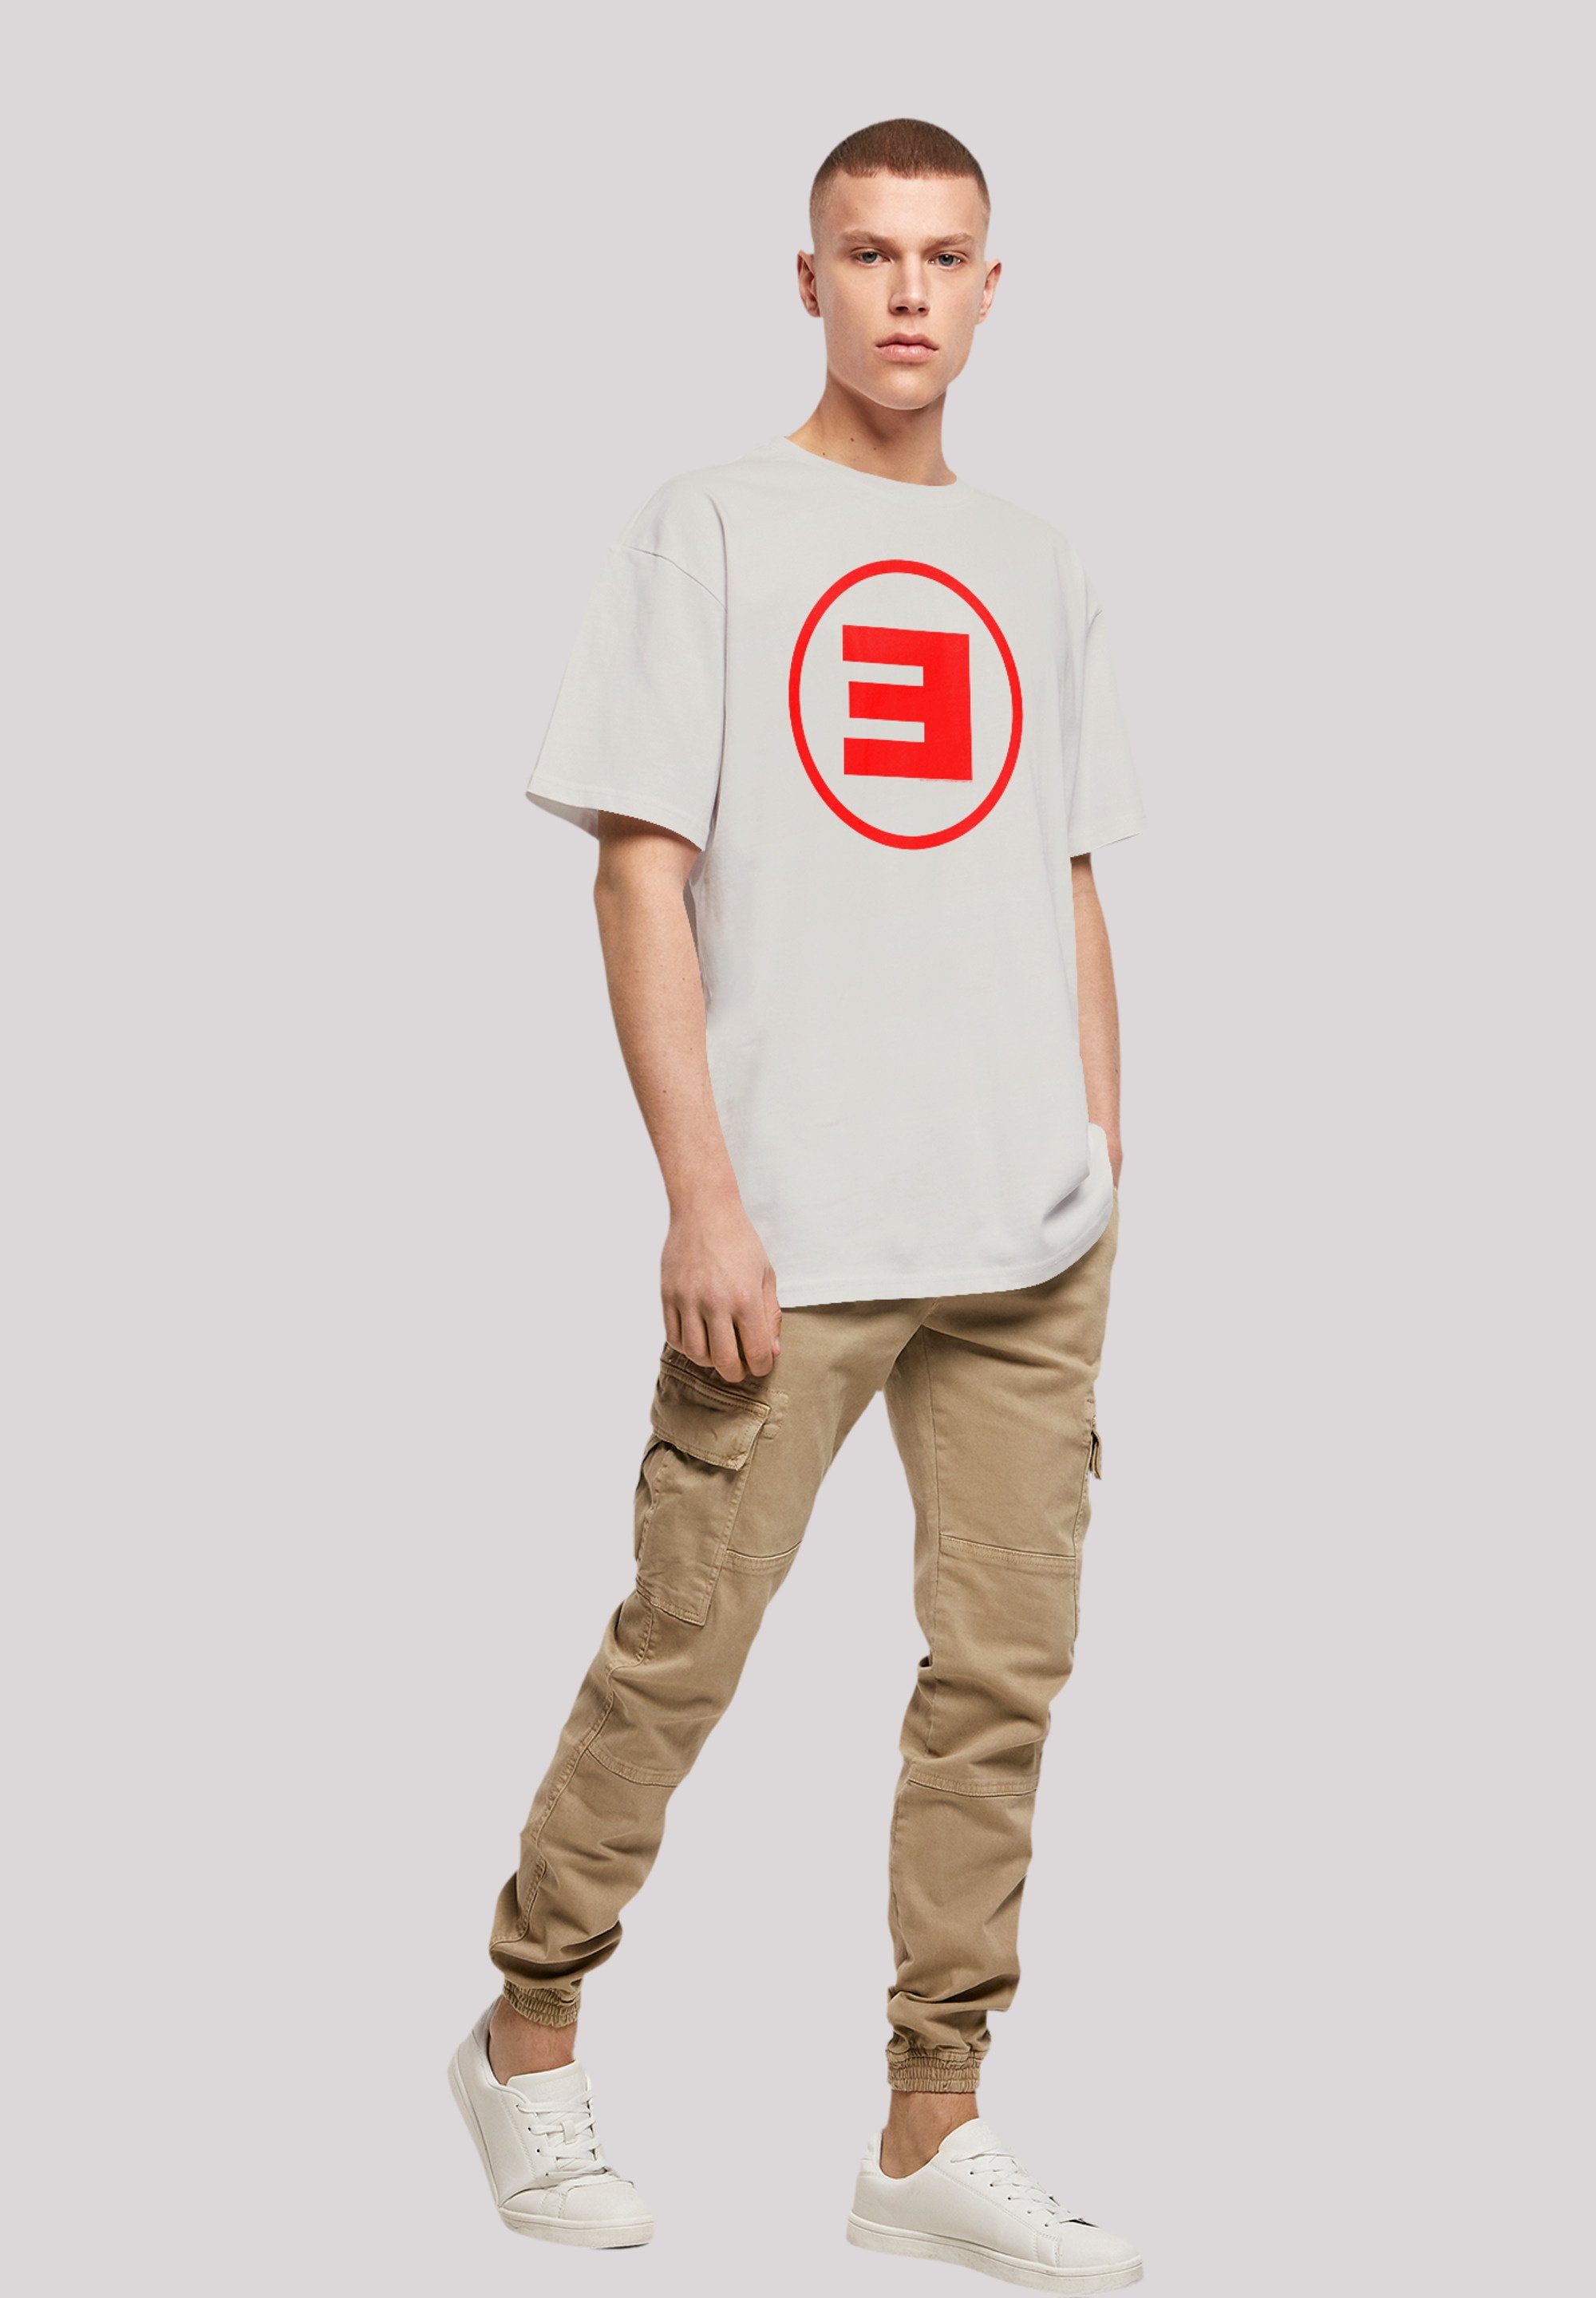 F4NT4STIC T-Shirt Music Hip Musik, Off Rock Hop E Premium Eminem Rap lightasphalt By Circle Qualität